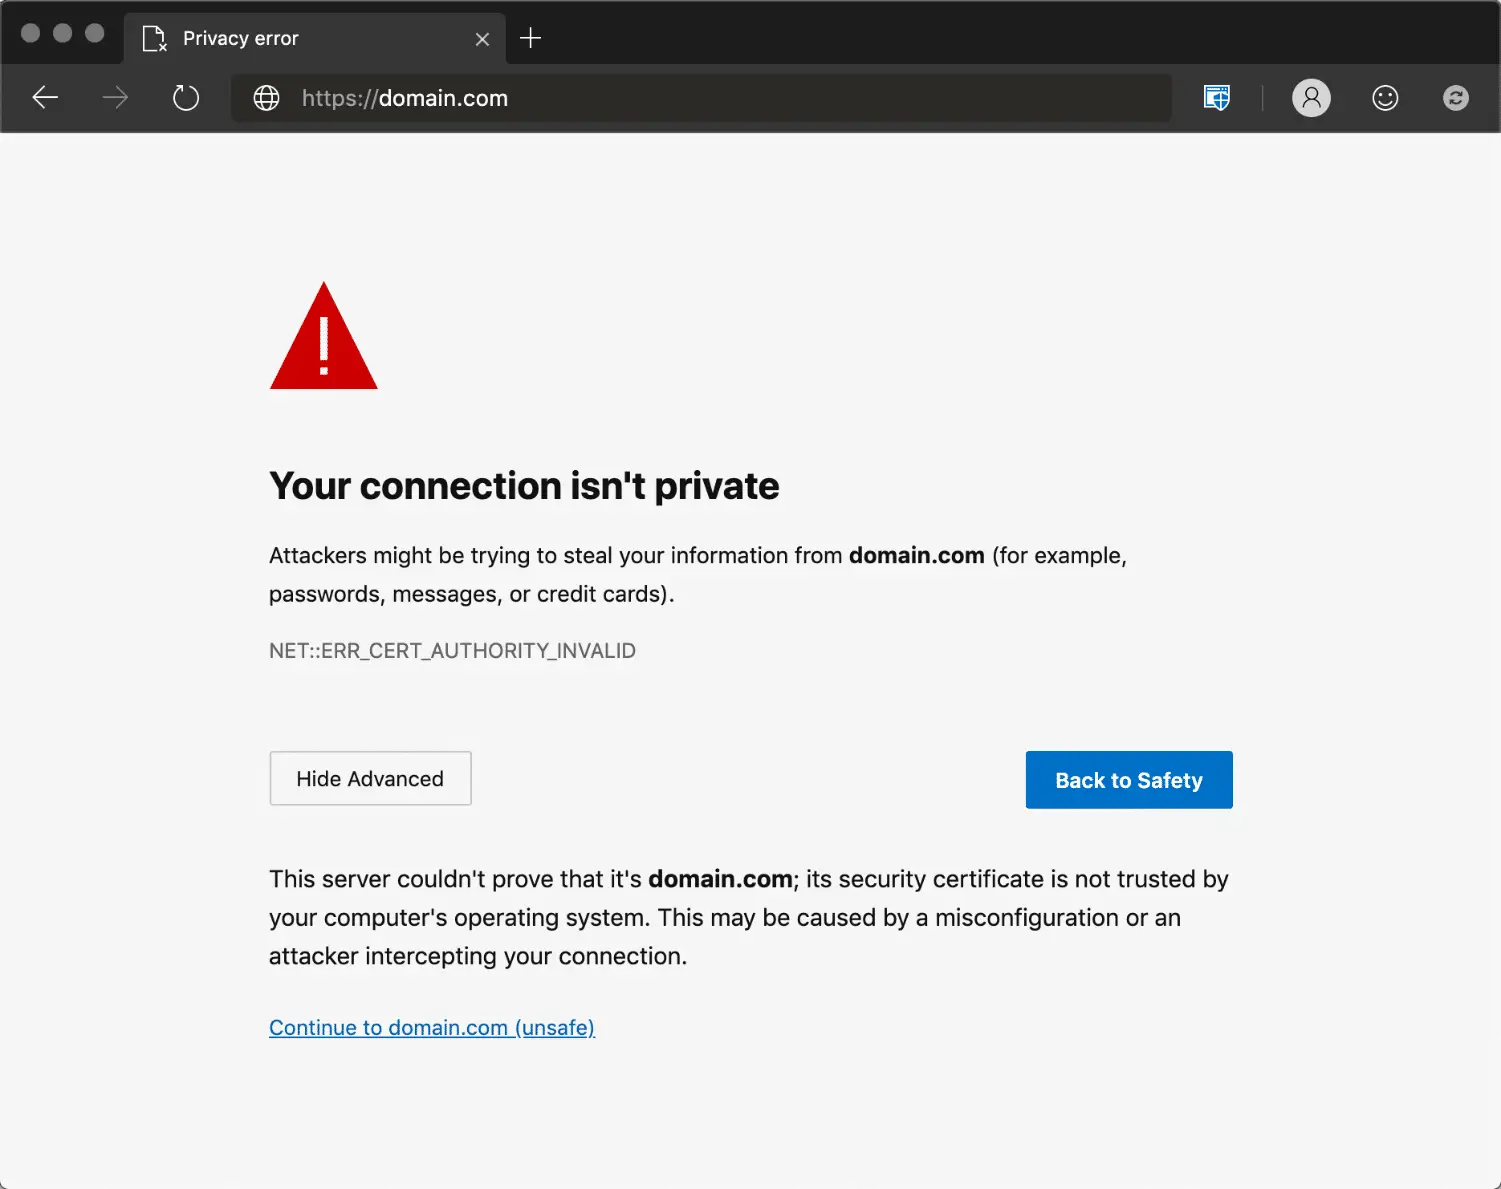 net::err_cert_authority_invalid privacy error on Microsoft Edge